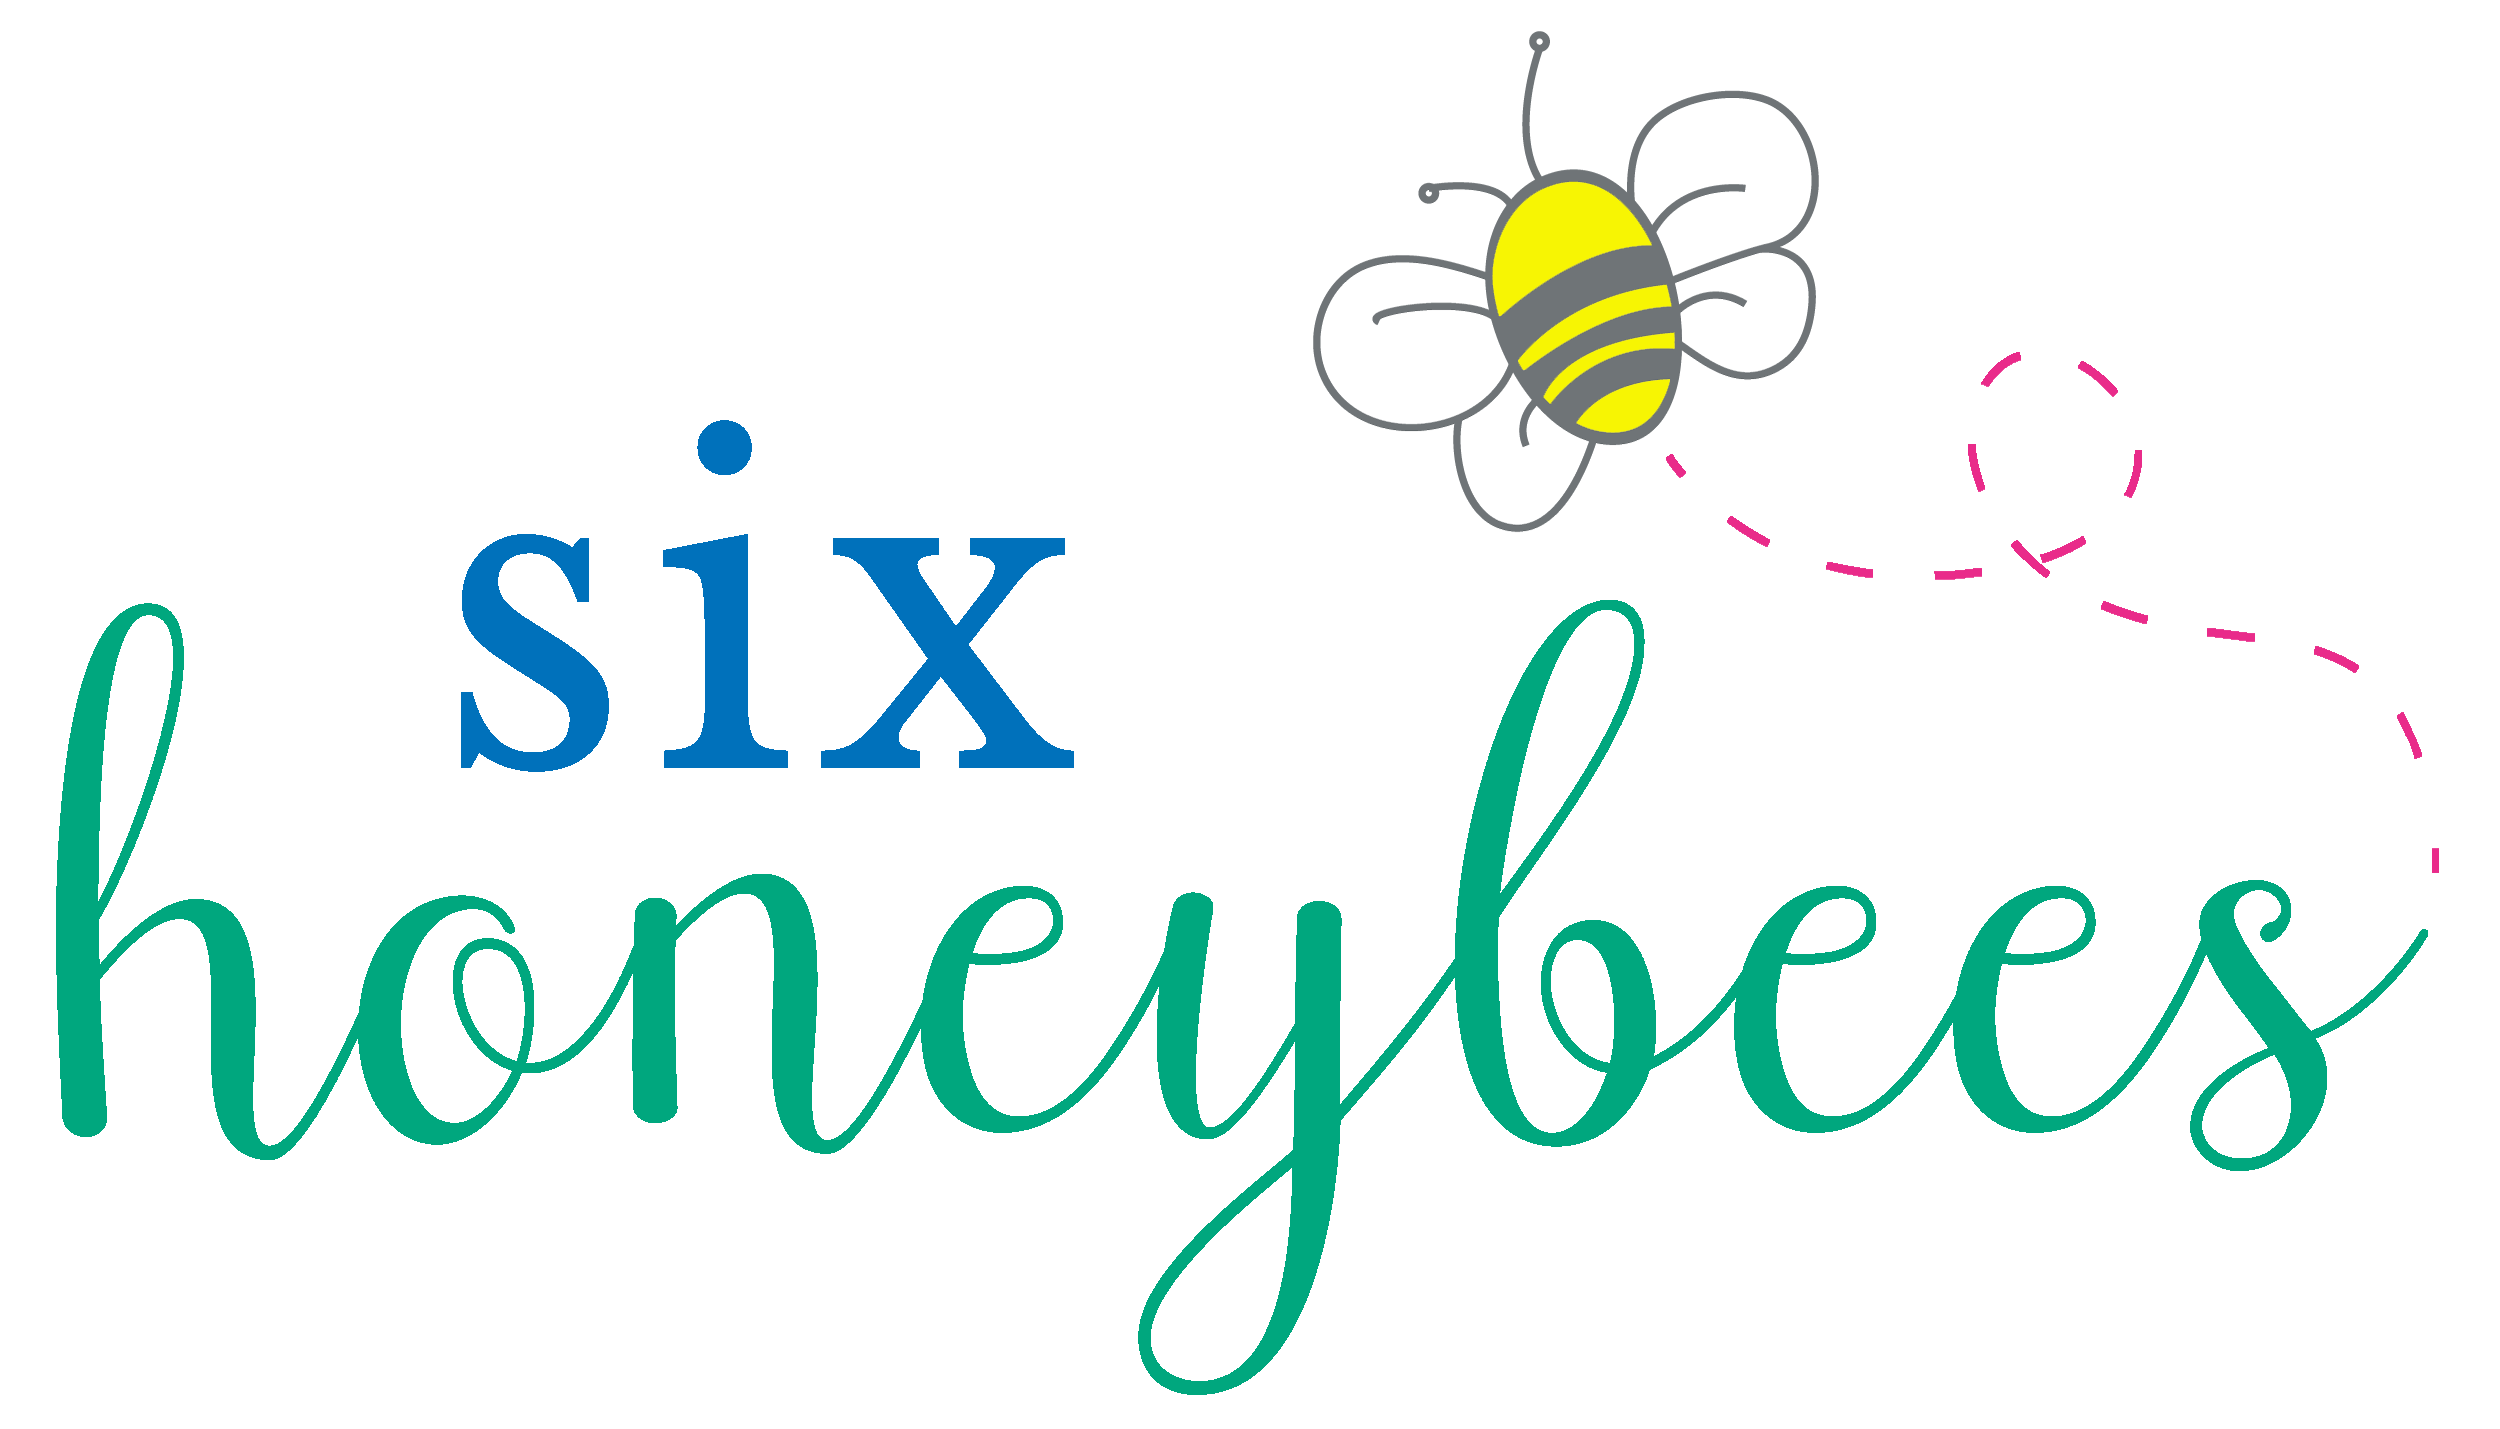 Six Honeybees